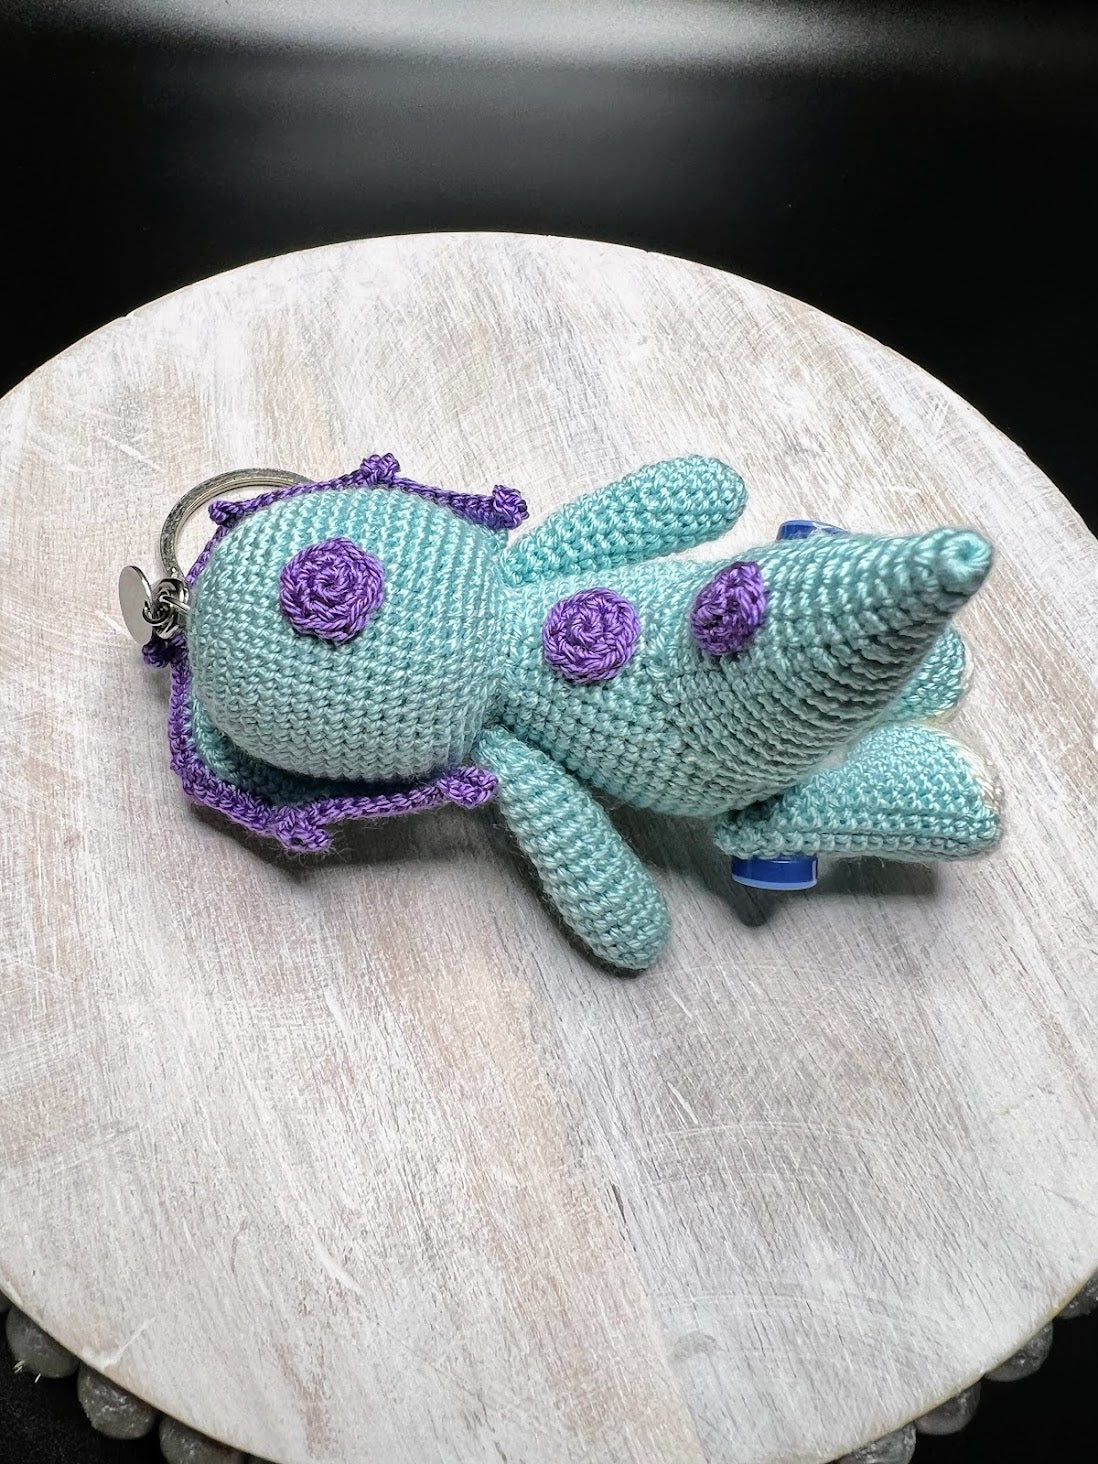 Stuffed Dinosaur  Keychain Toy - Crochet Knitted Amigurumi Toy